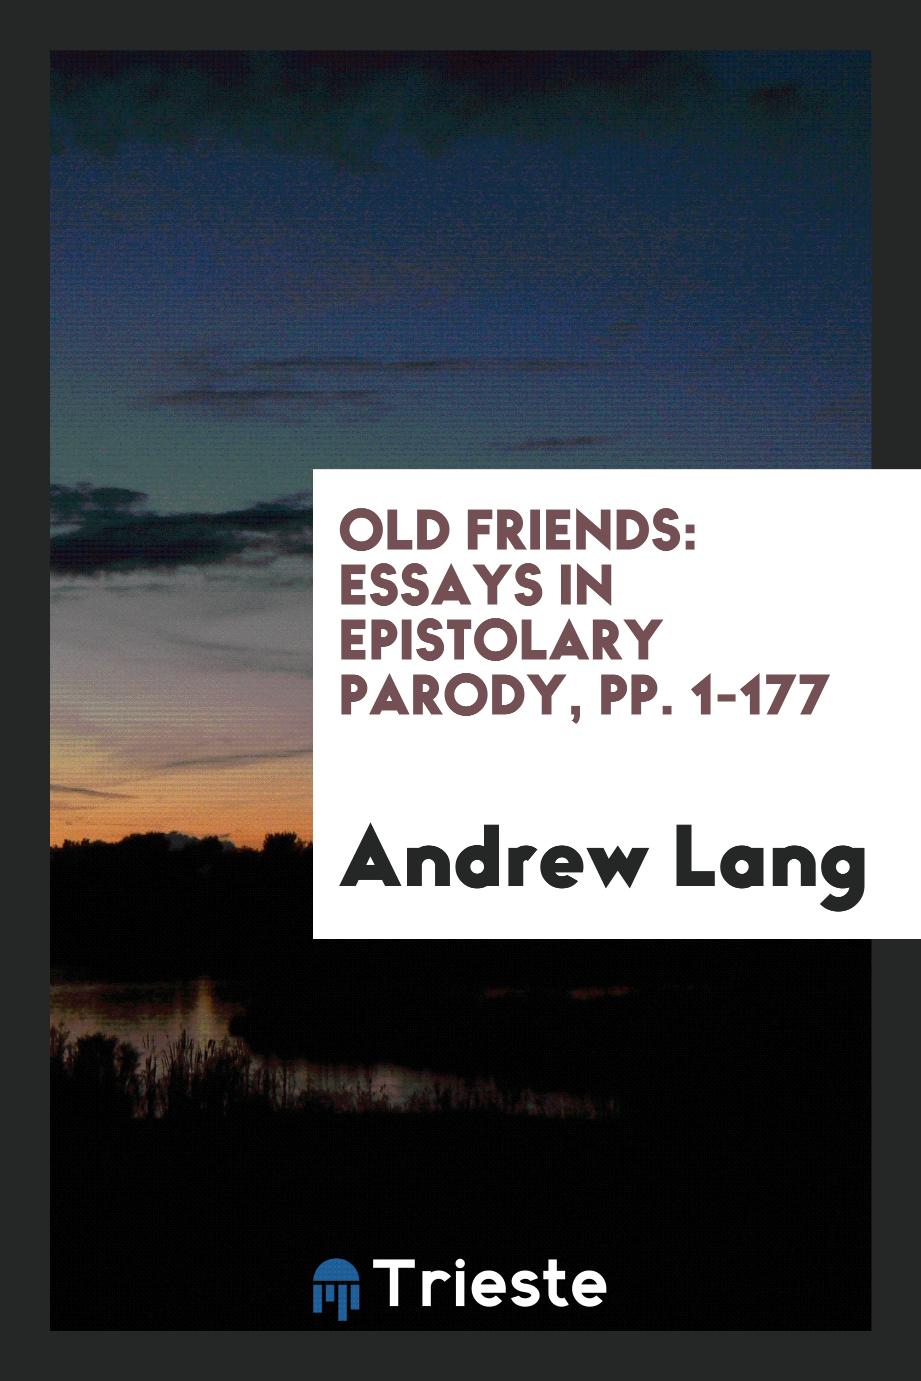 Old Friends: Essays in Epistolary Parody, pp. 1-177